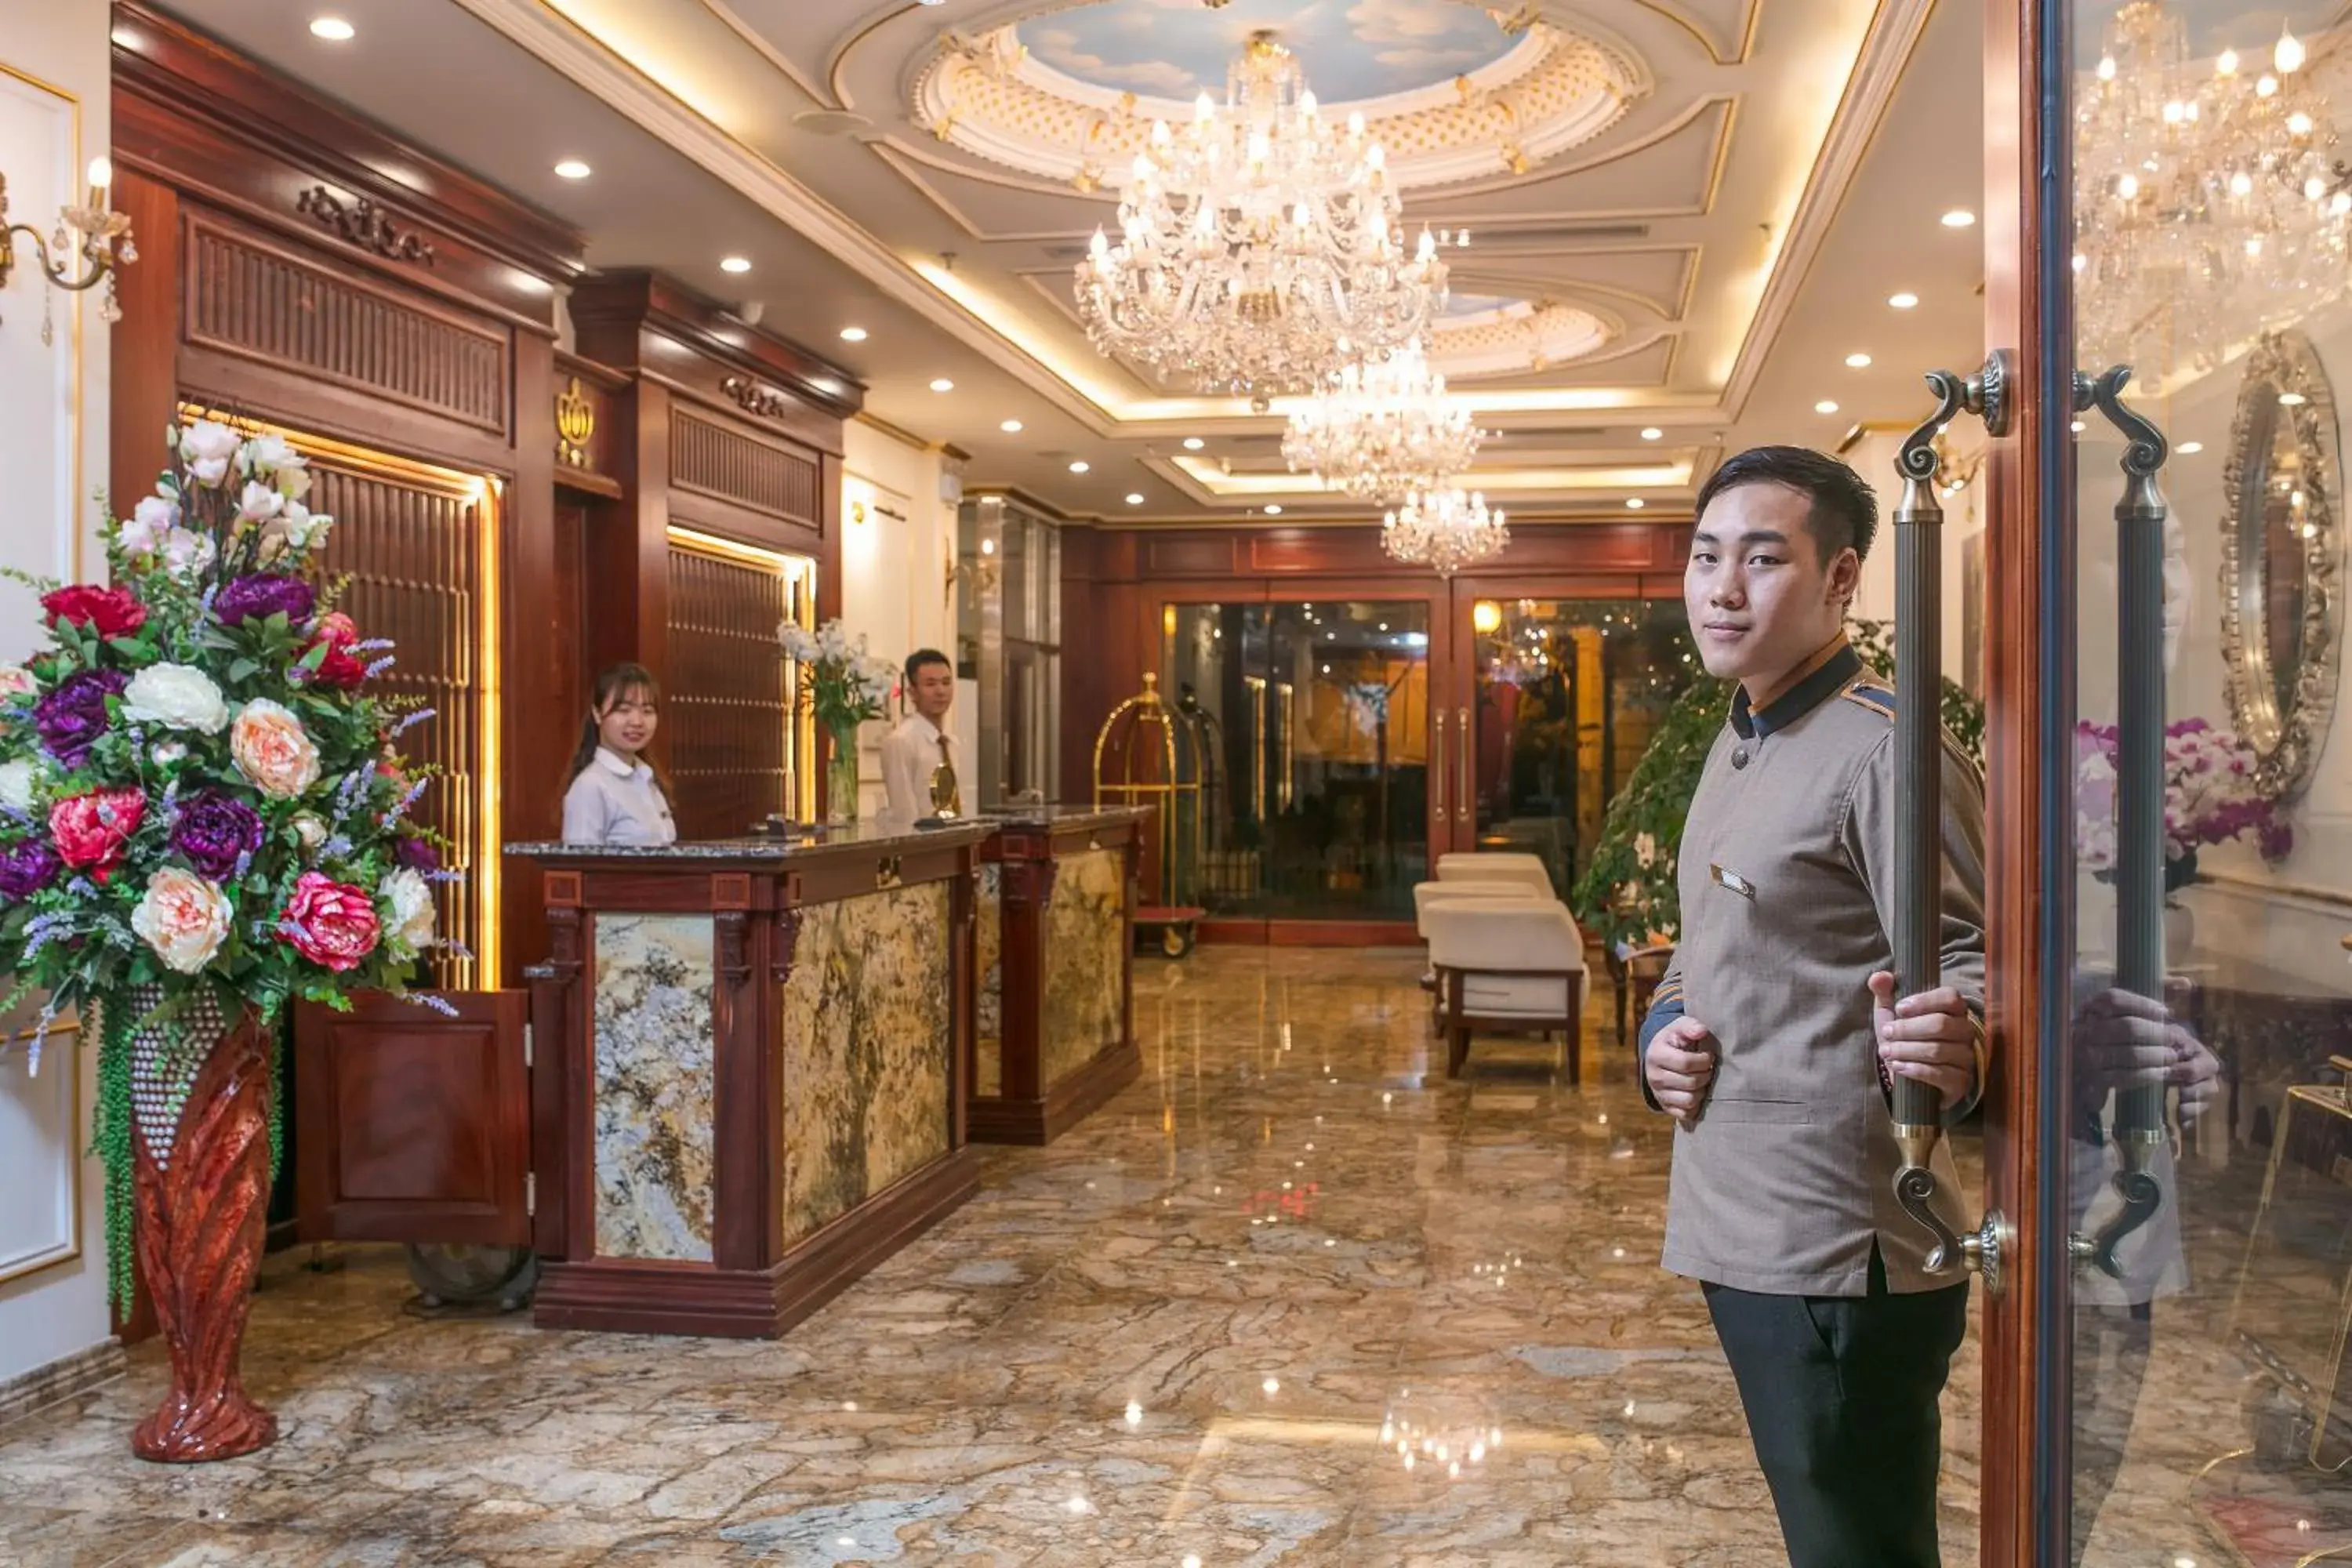 Lobby or reception in Royal St Hanoi Hotel